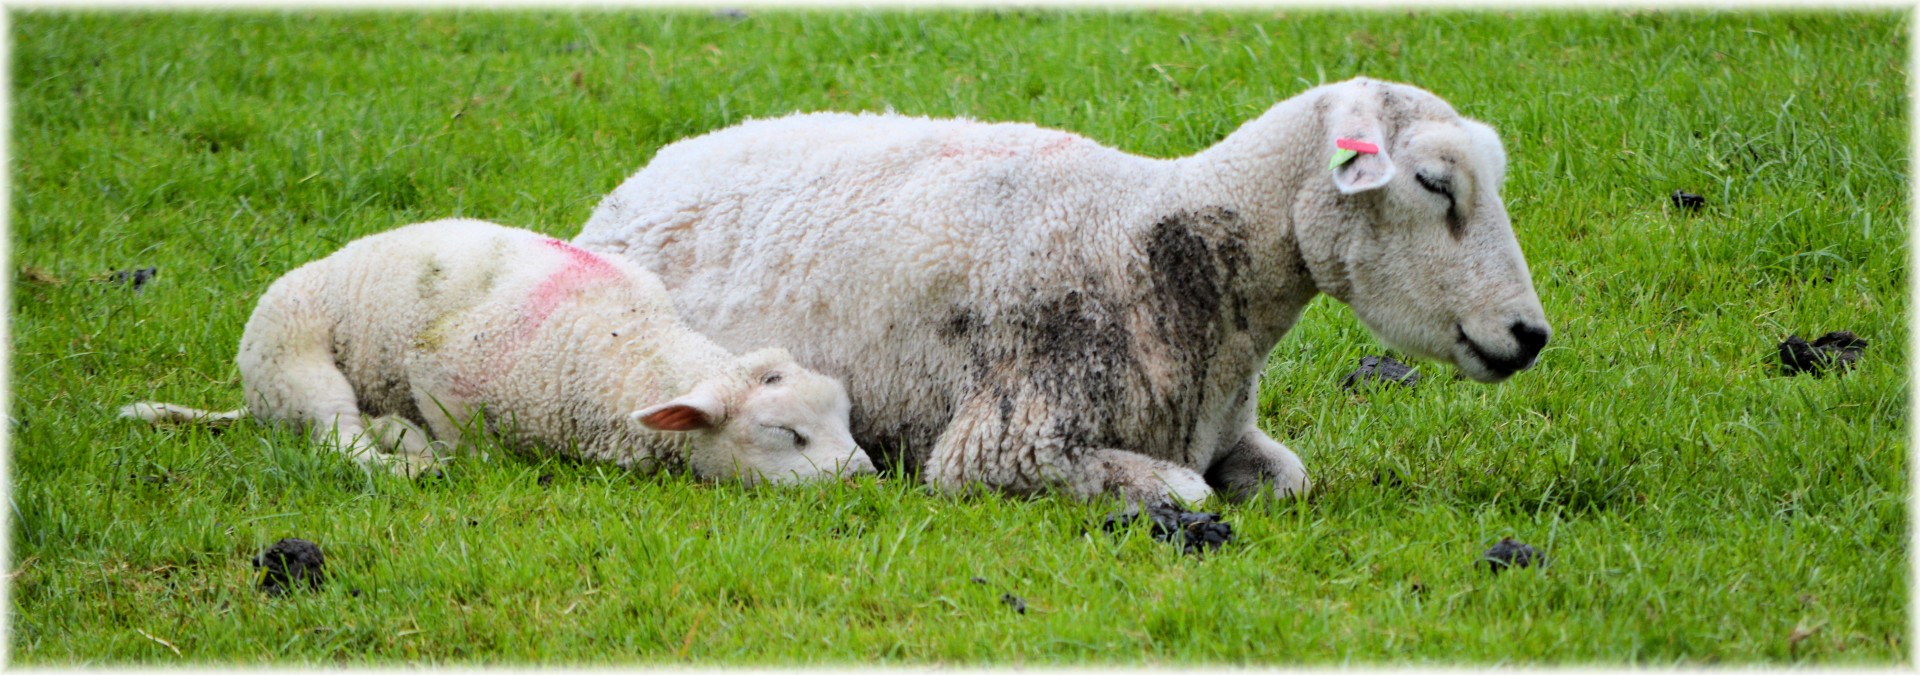 sheep lamb sleep free photo